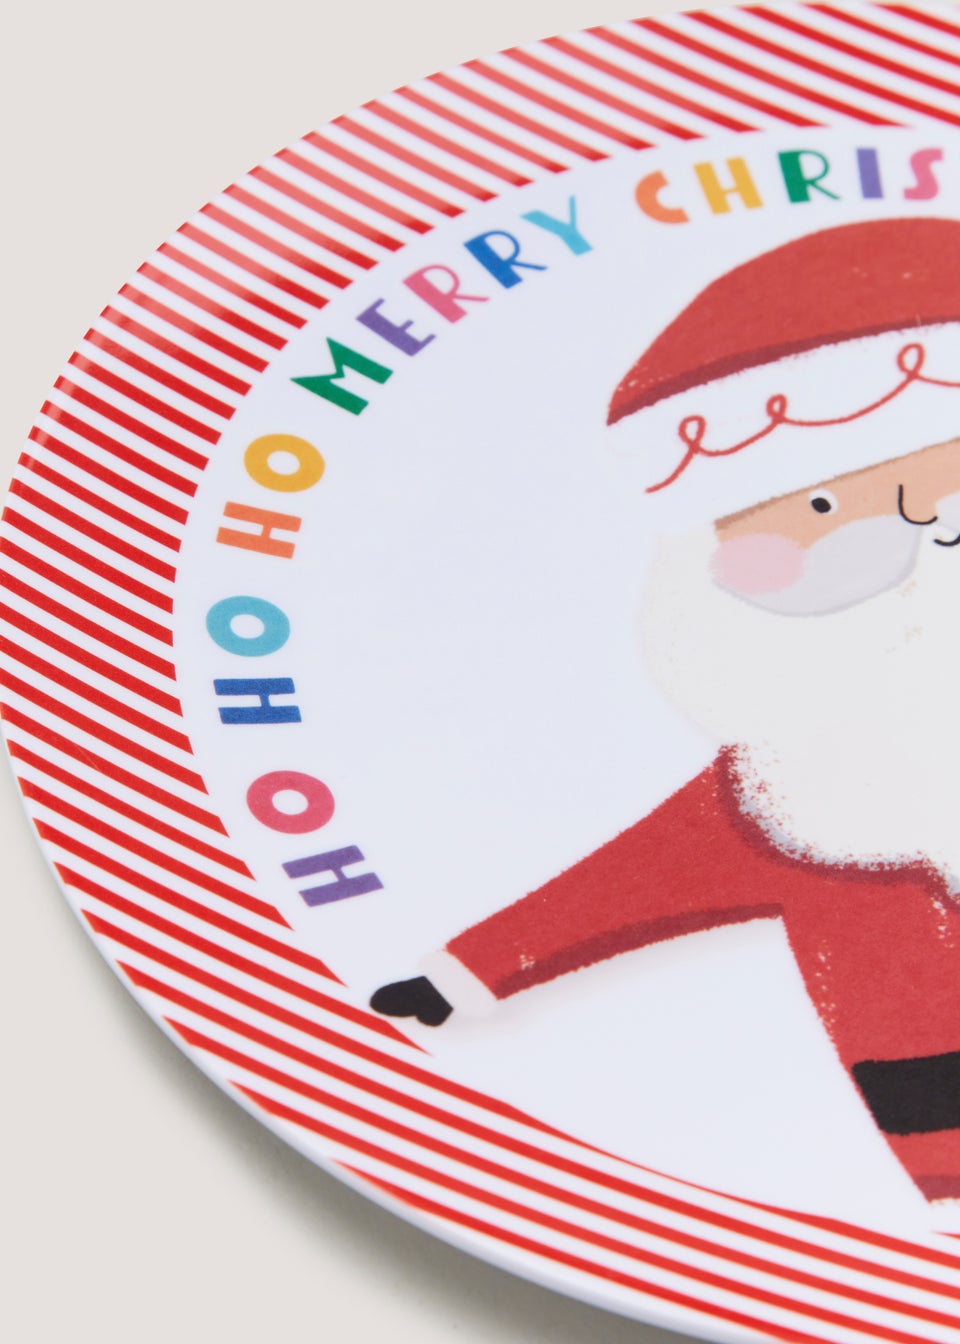 Kids Santa Slogan Christmas Plate (23cm)